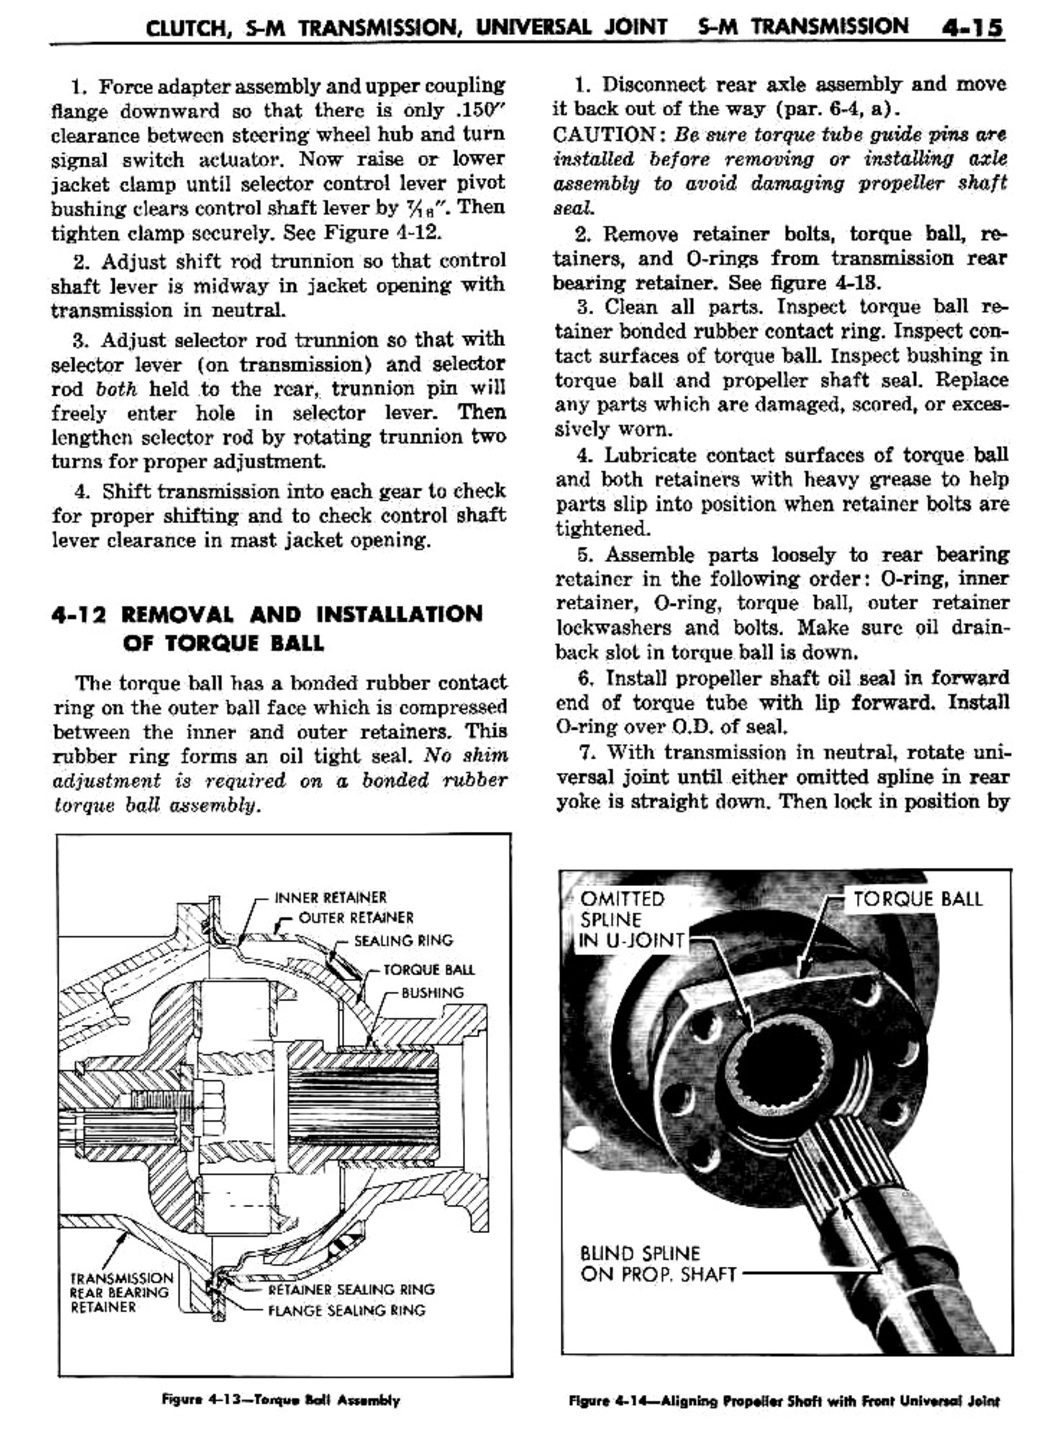 n_05 1960 Buick Shop Manual - Clutch & Man Trans-015-015.jpg